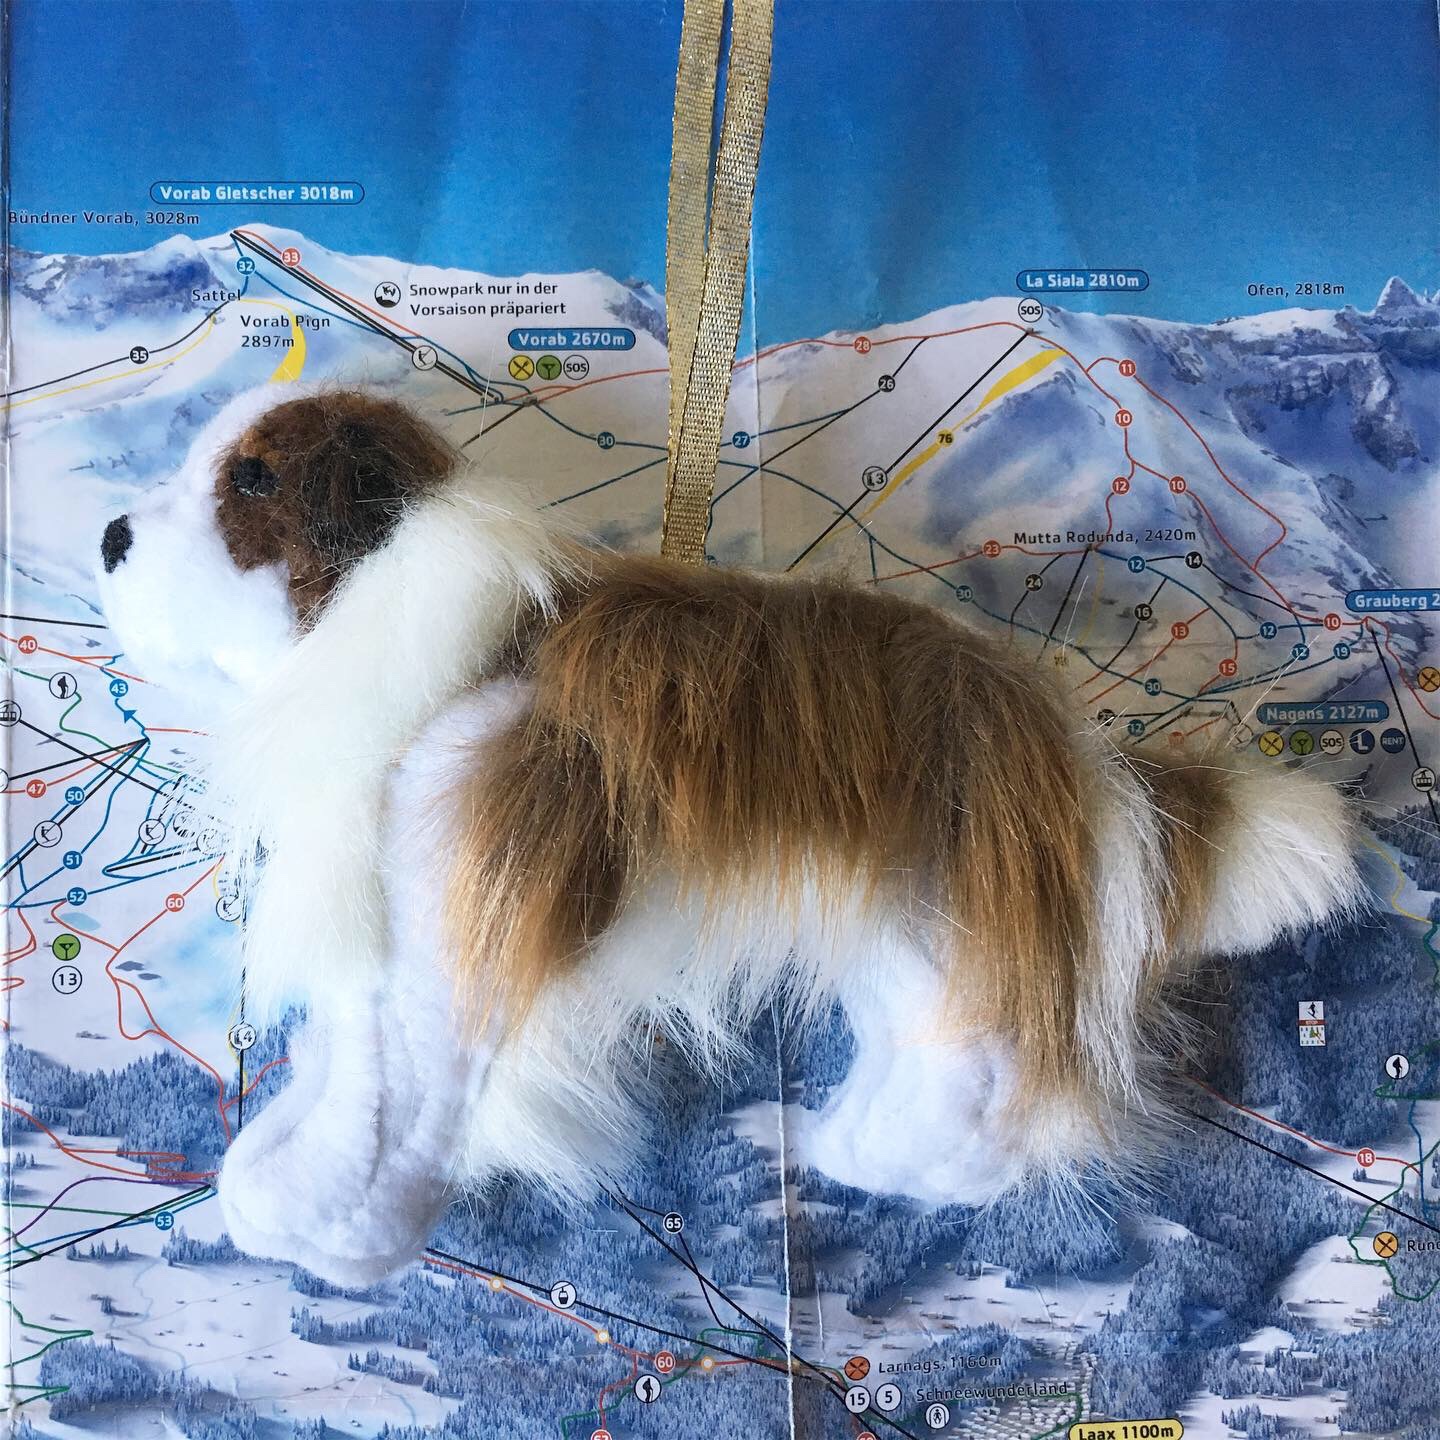 Saint Bernard Dog Ornament, Hand-Appliqued Felt and Faux Fur, Approx. 4 x 6 inches, 2019